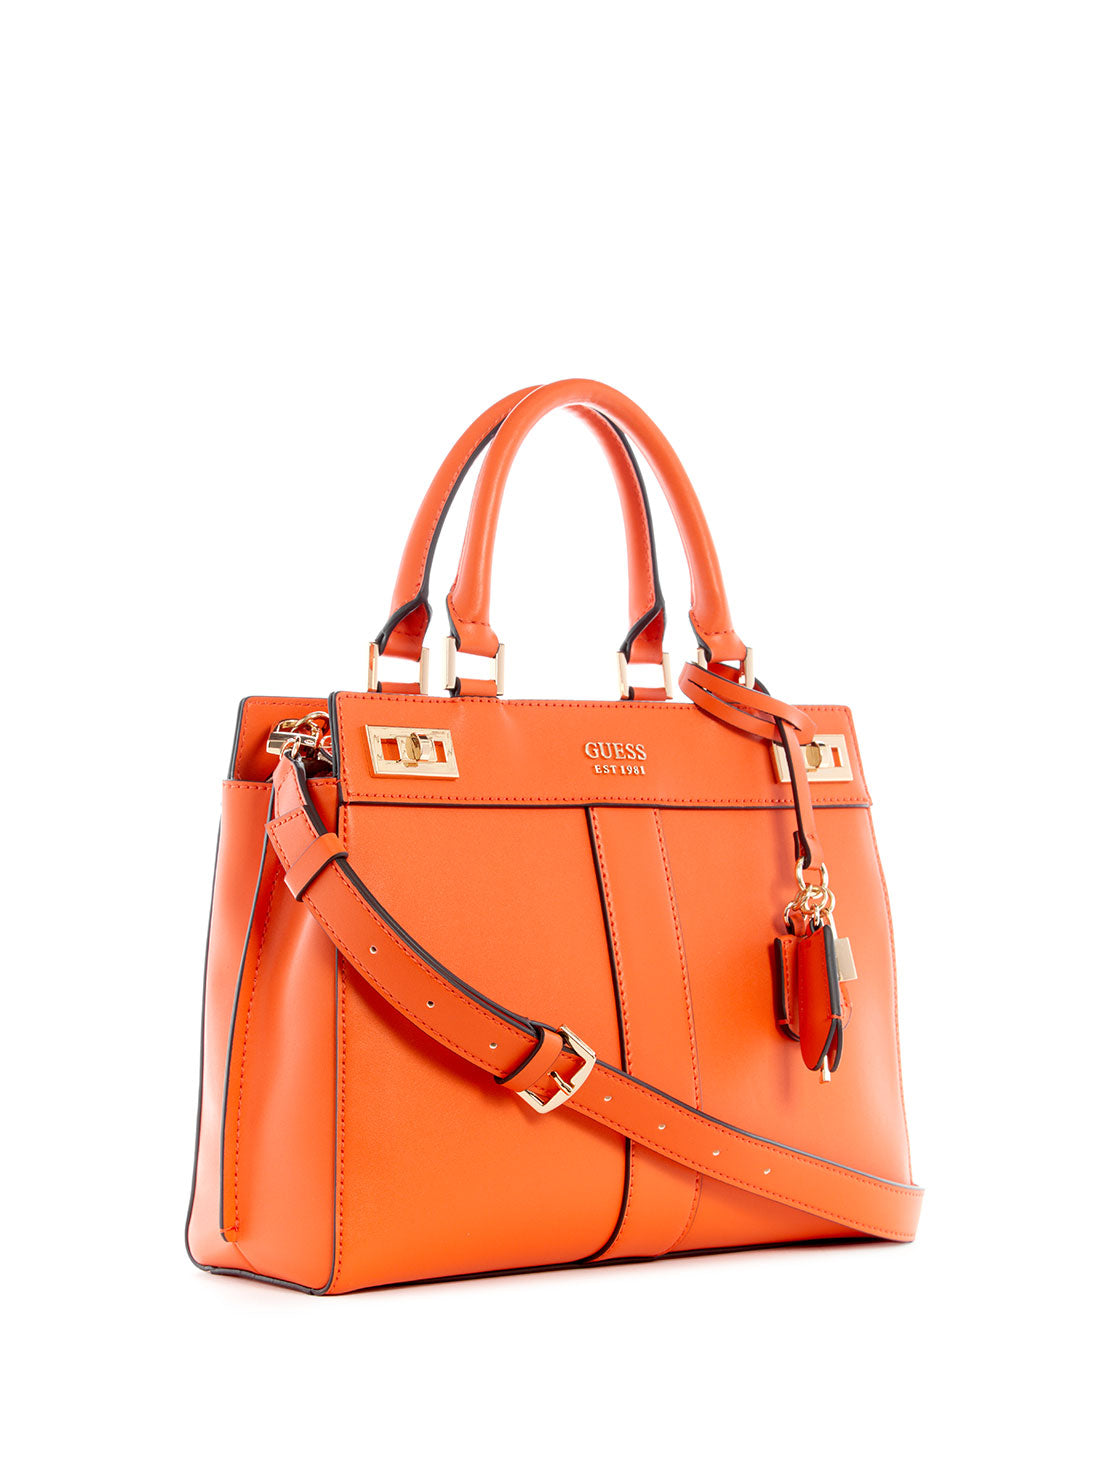 GUESS Women's Orange Katey Luxury Satchel Bag VC787026 Front Side View